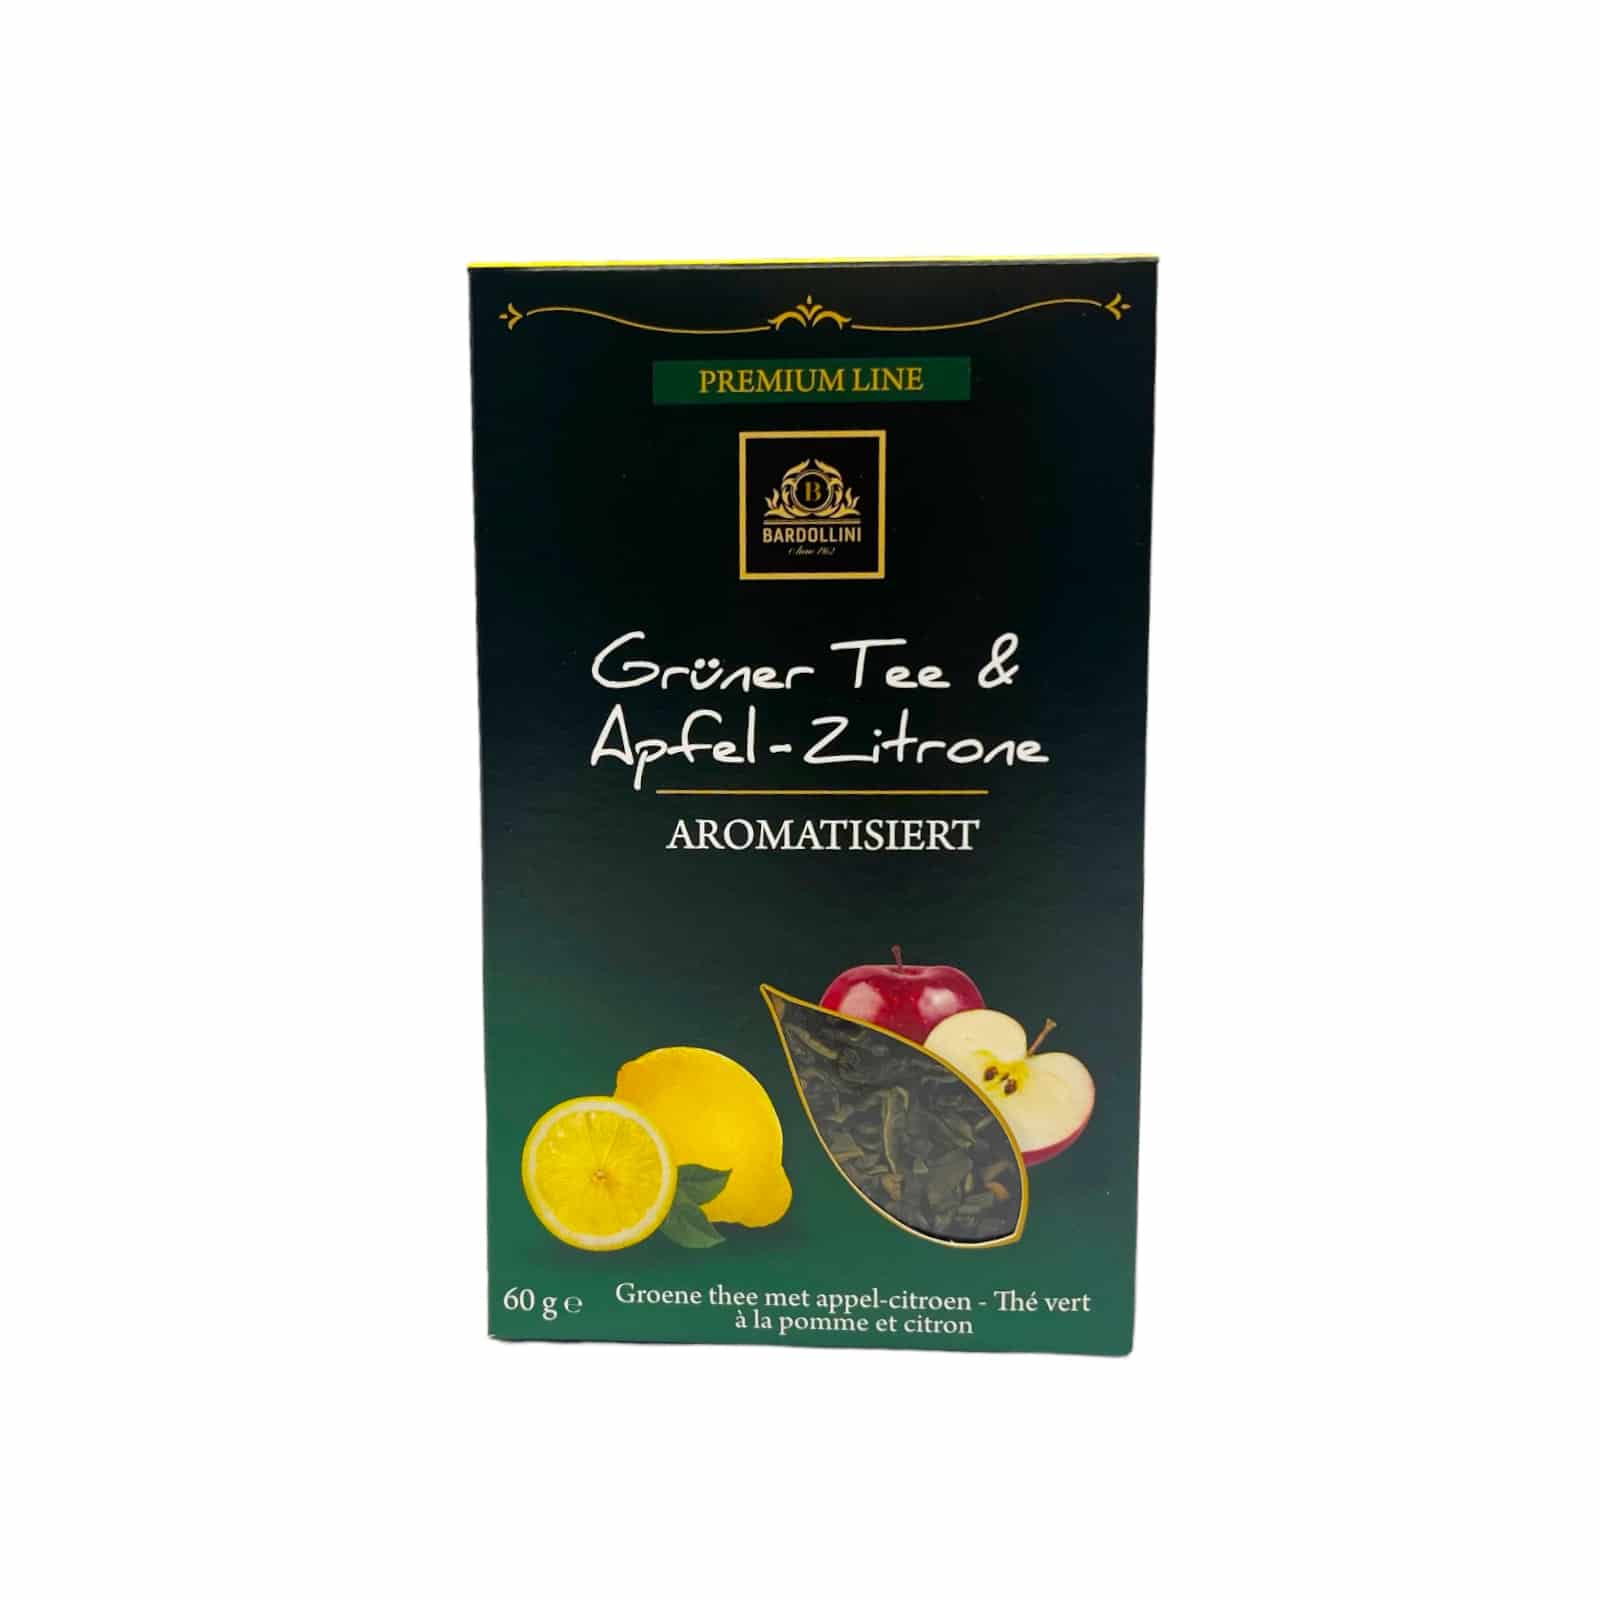 Grüner Tee & Apfel-Zitrone 60g